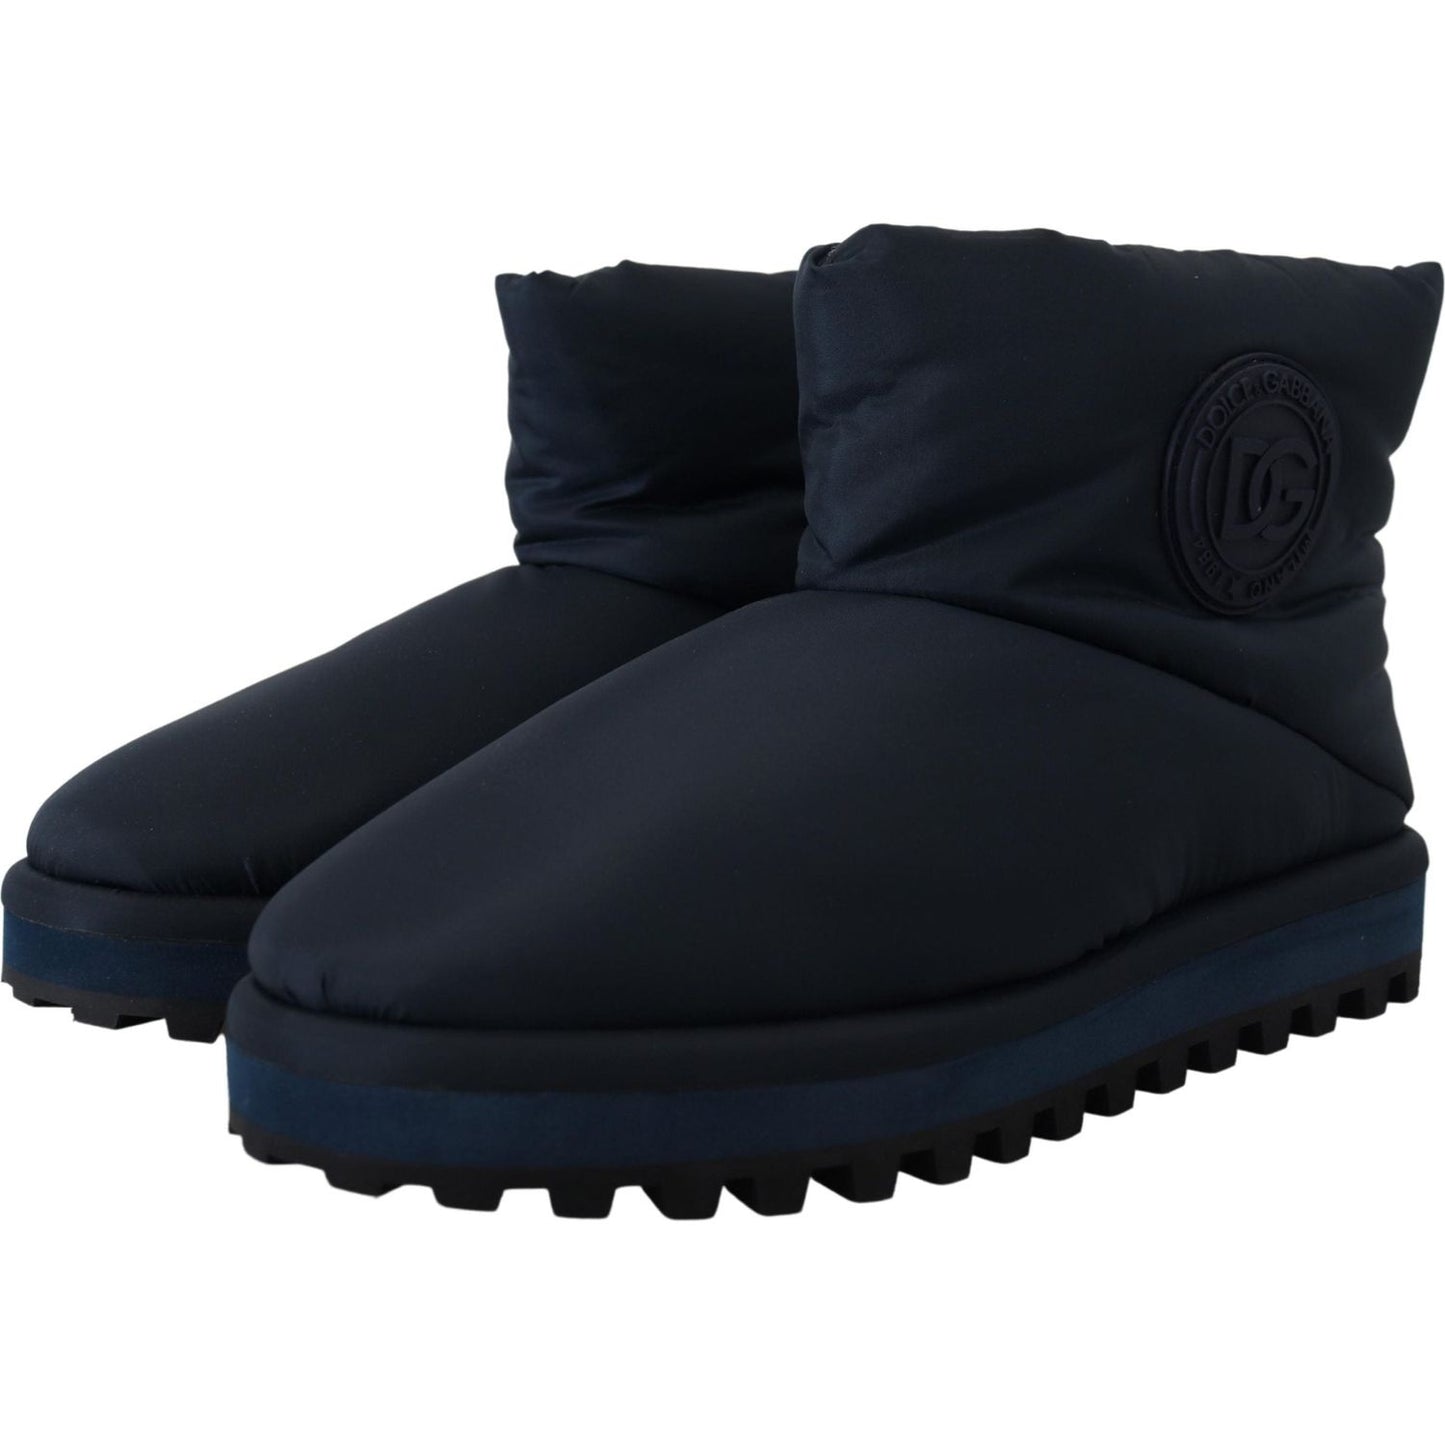 Dolce & GabbanaElegant Ankle Height Blue Boots for Sophisticated StyleMcRichard Designer Brands£419.00